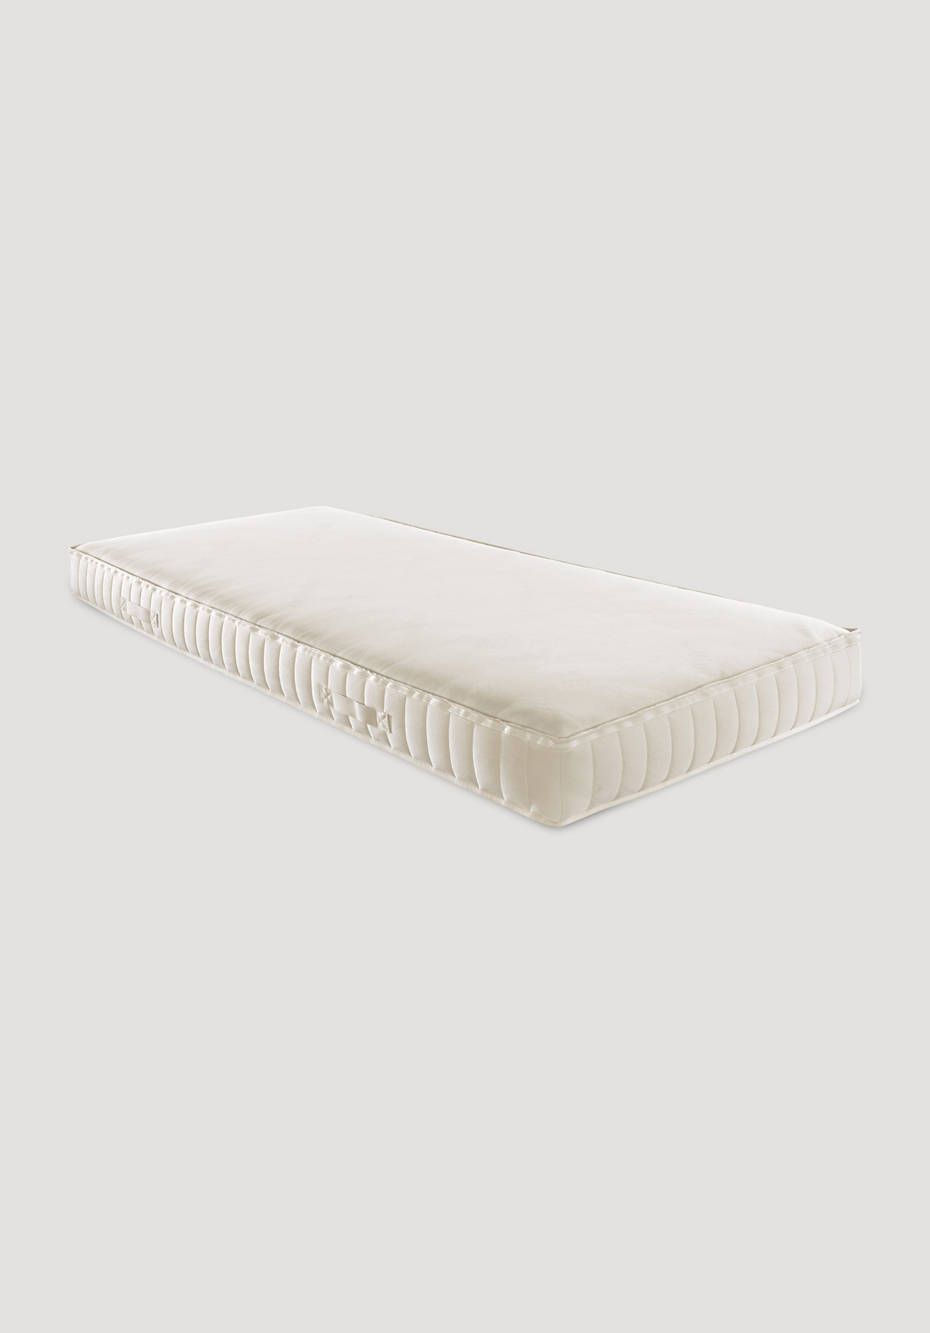 Natural latex mattress MEDIUM